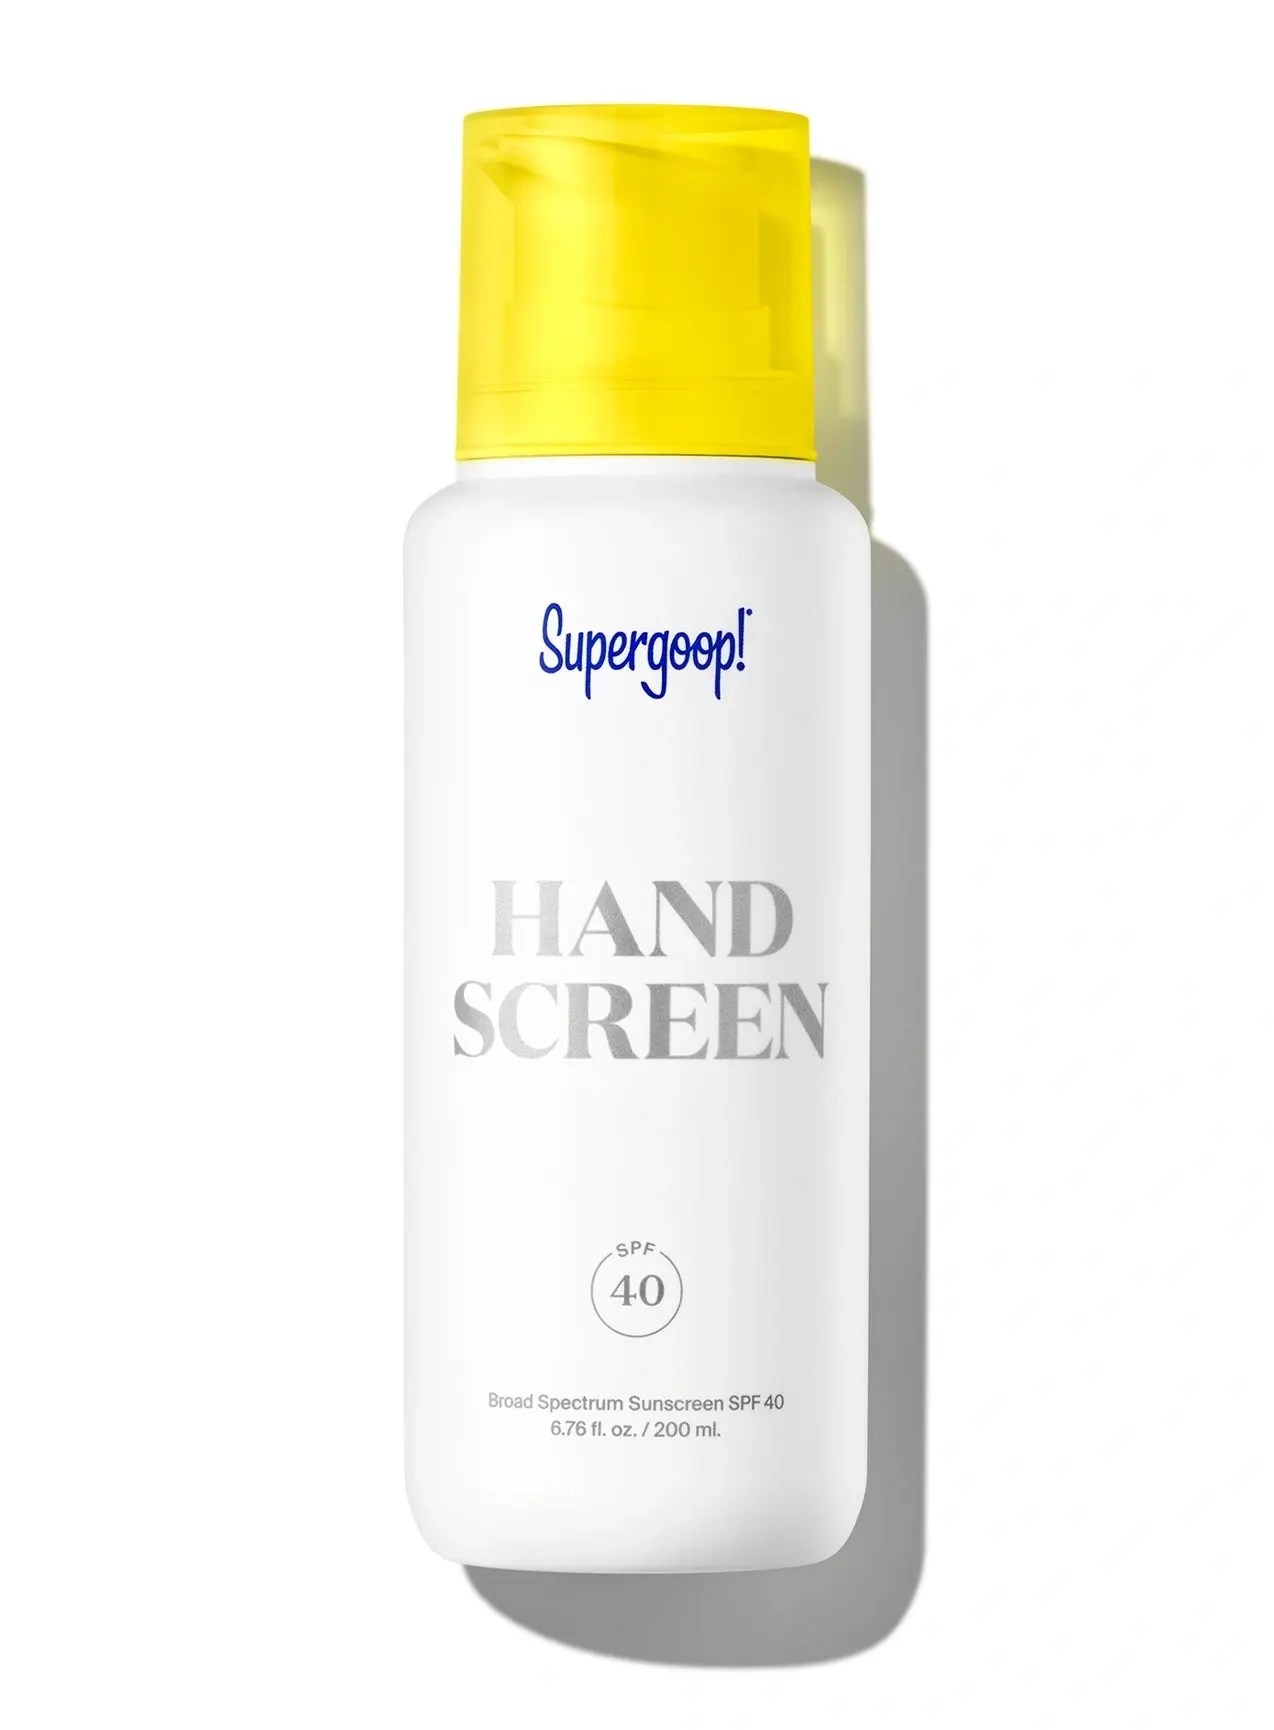 supergoop hand screen spf hand cream bottle on a white background